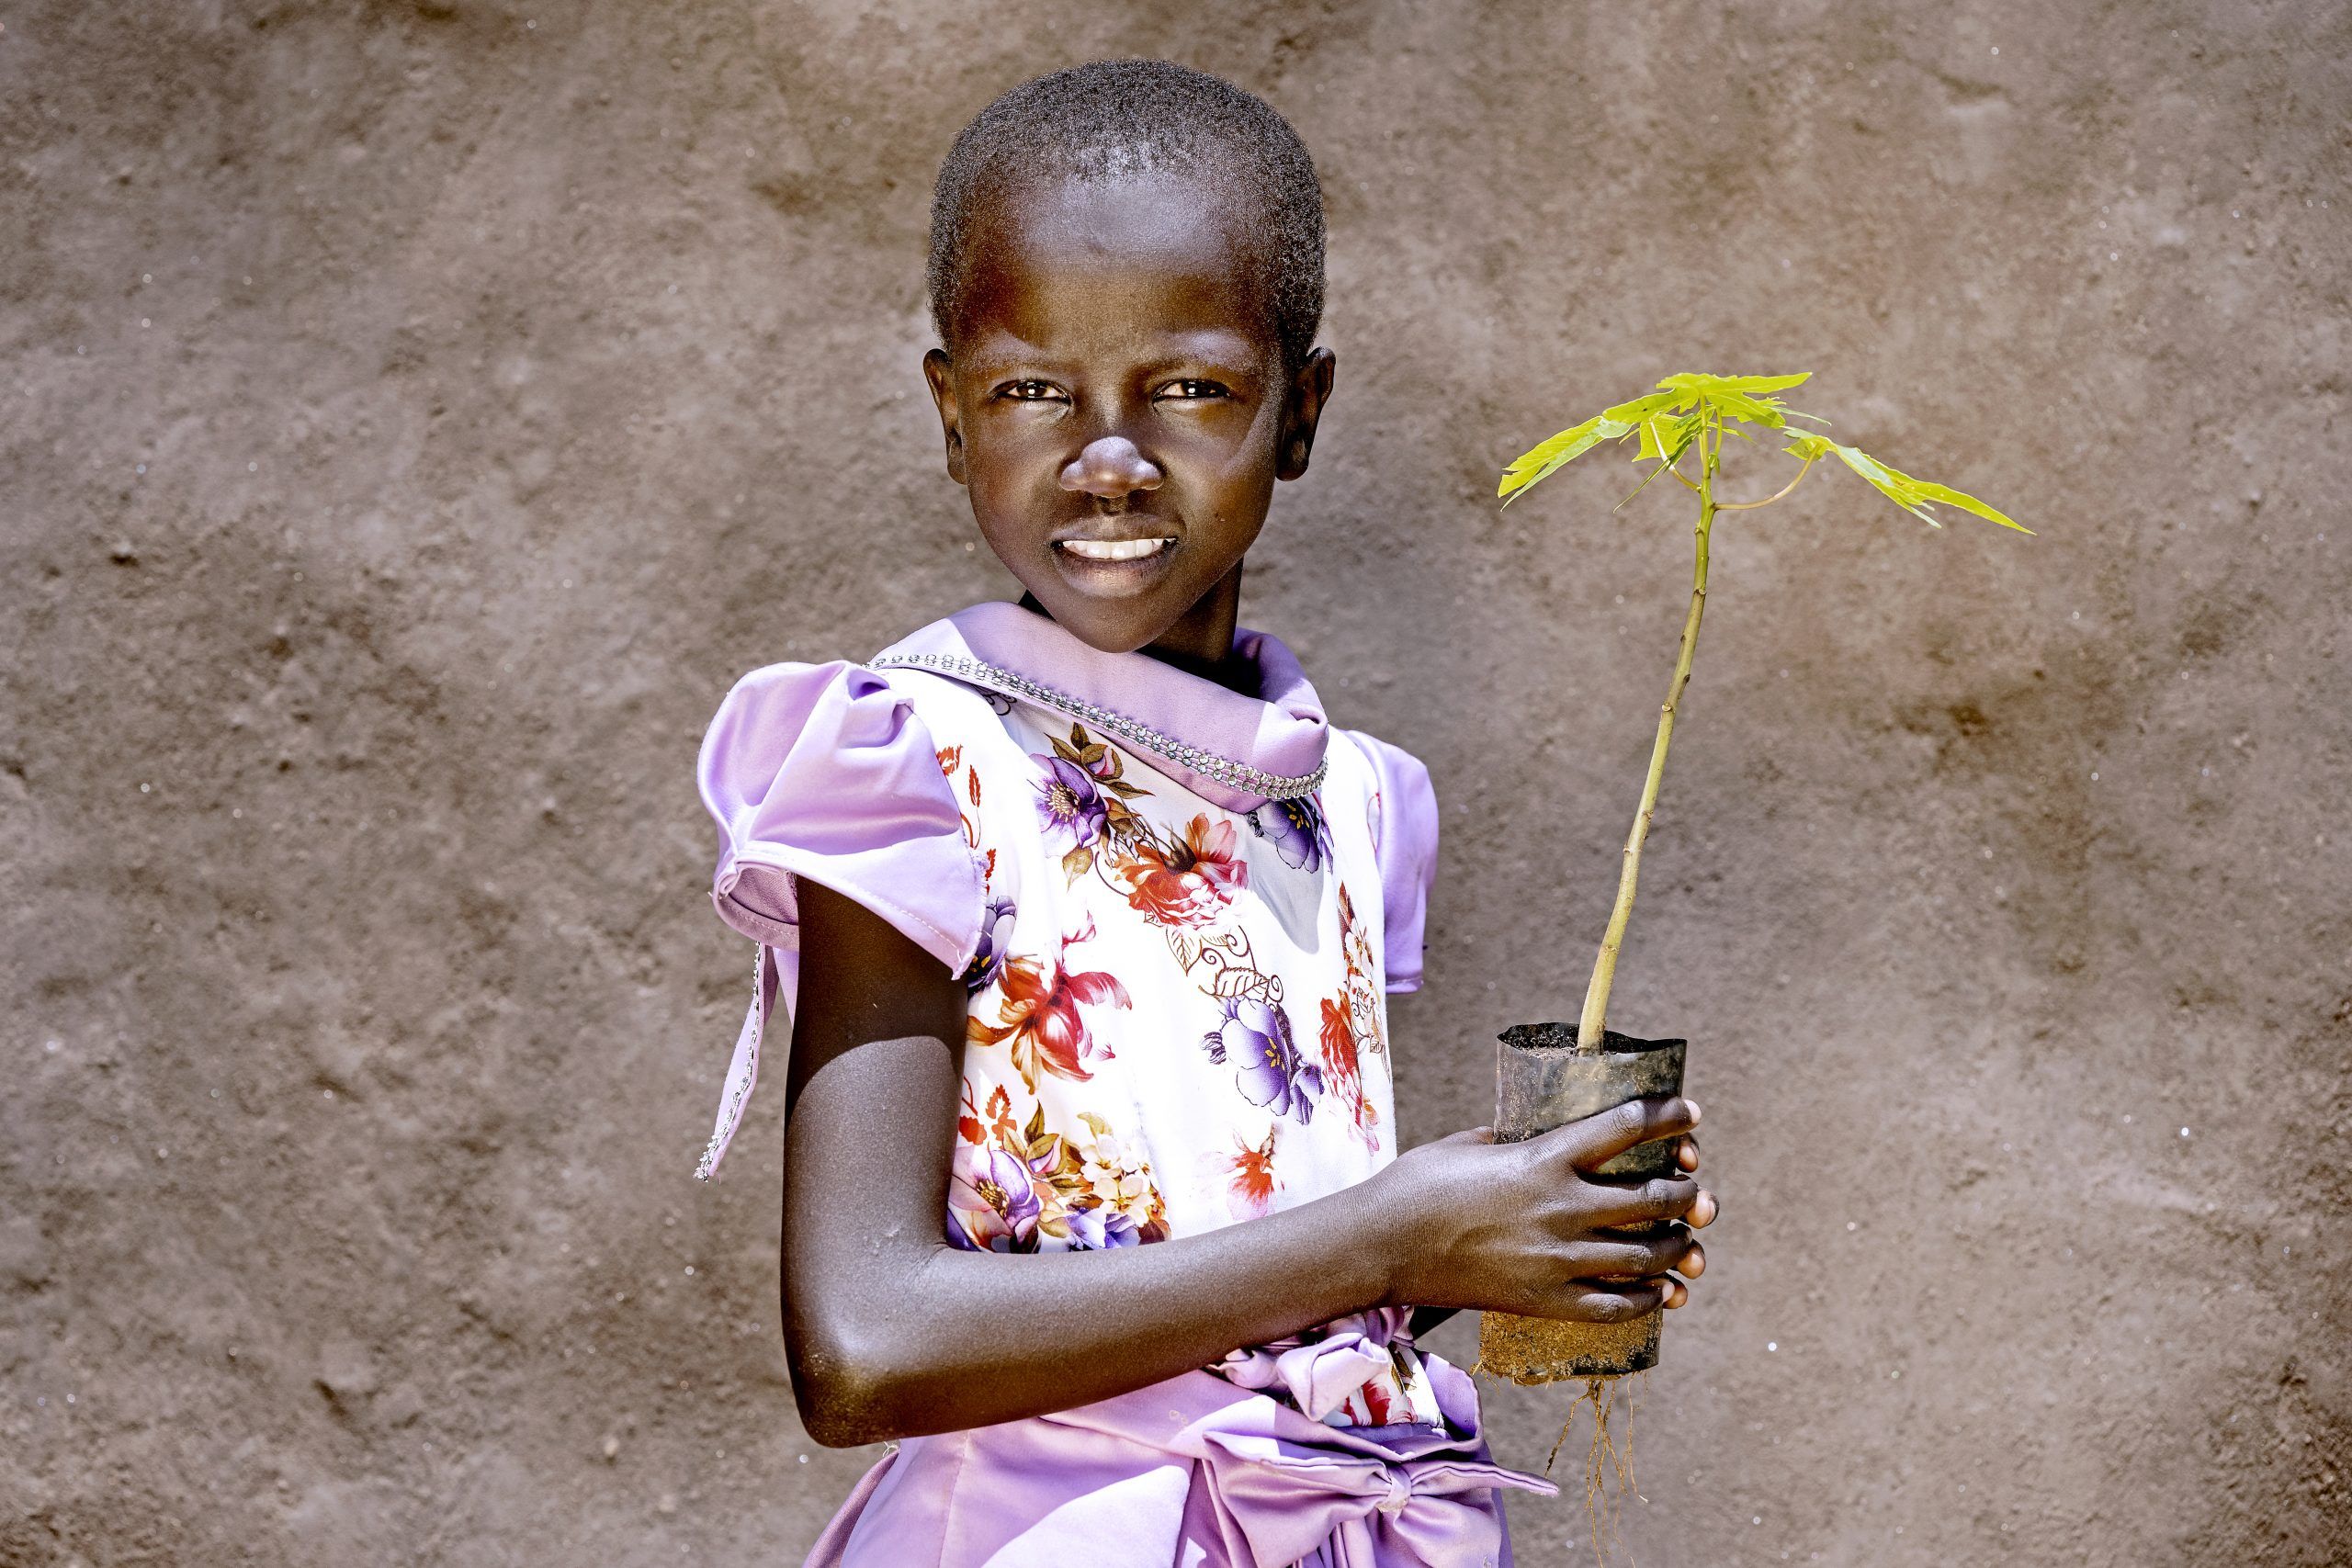 Pige med lilla kjole står med en træspire i hånden